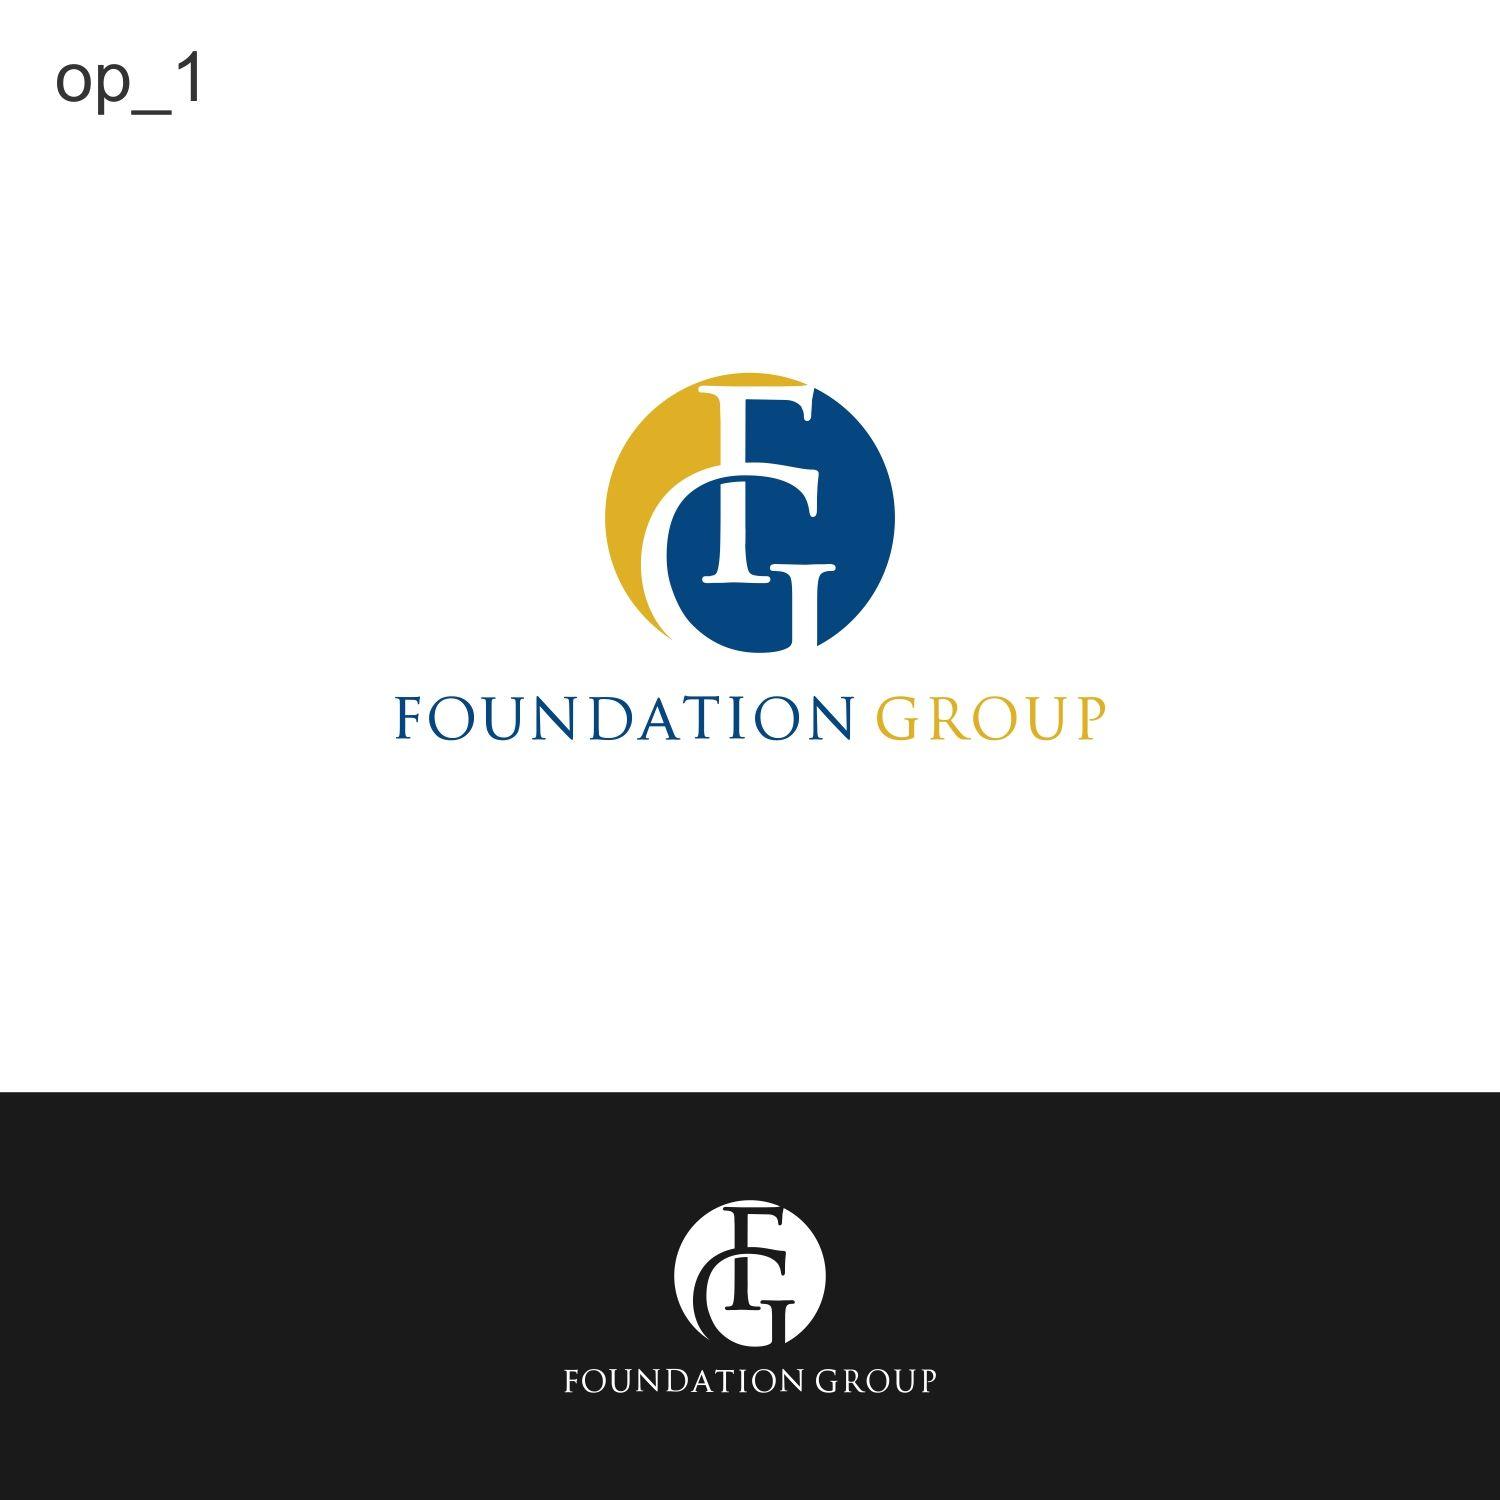 Foundation Group Logo - Professional, Upmarket, Non Profit Logo Design for Foundation Group